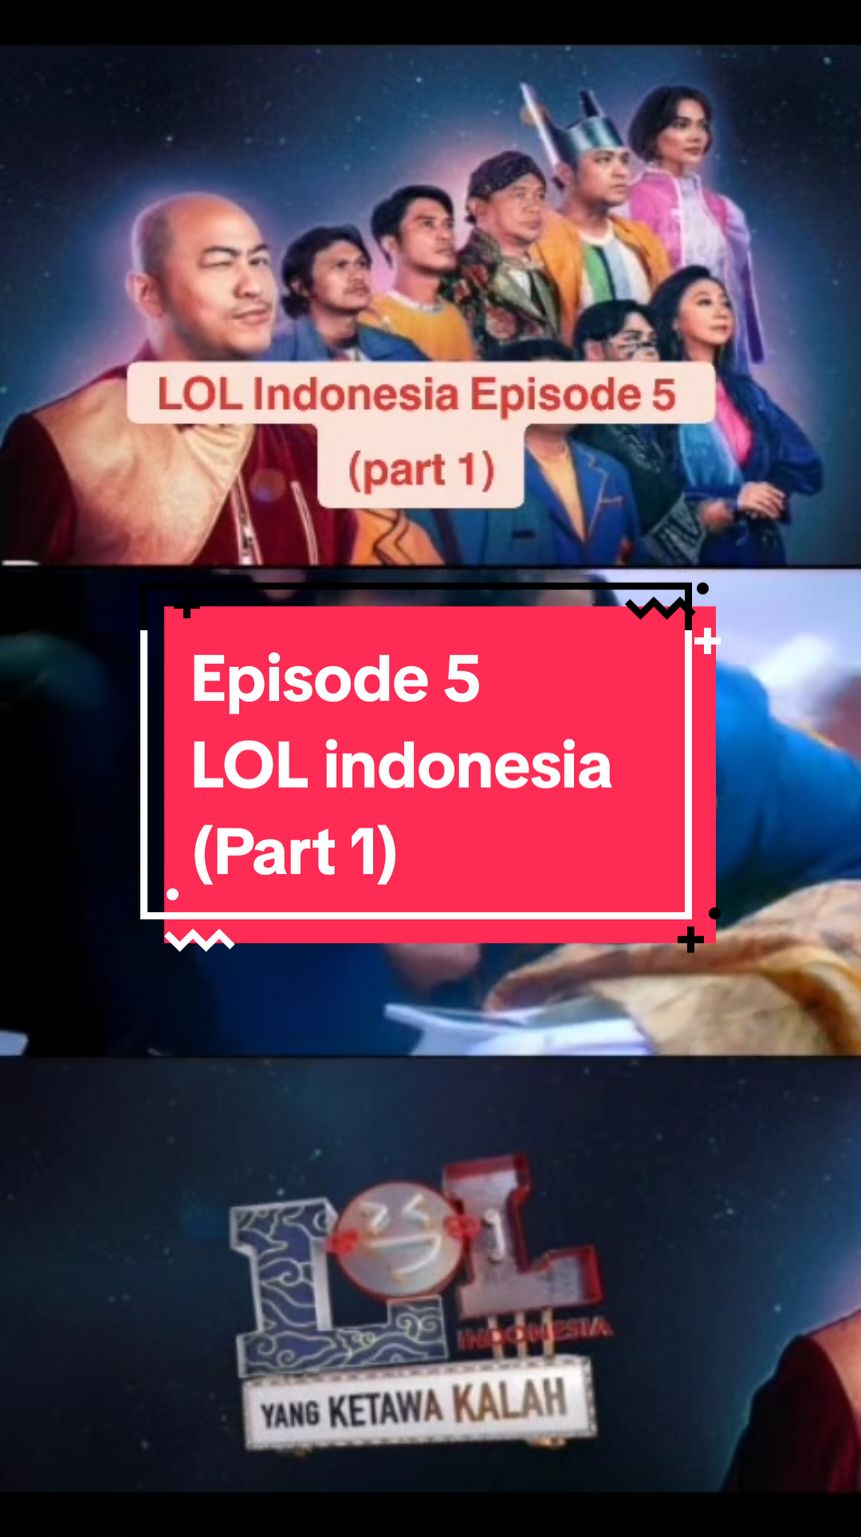 Episode 5 (Part 1) LOL Indonesia : Yang Ketawa Kalah #lolindonesia #yangketawakalah #episode5 #movieclips #bioskop #komedi 